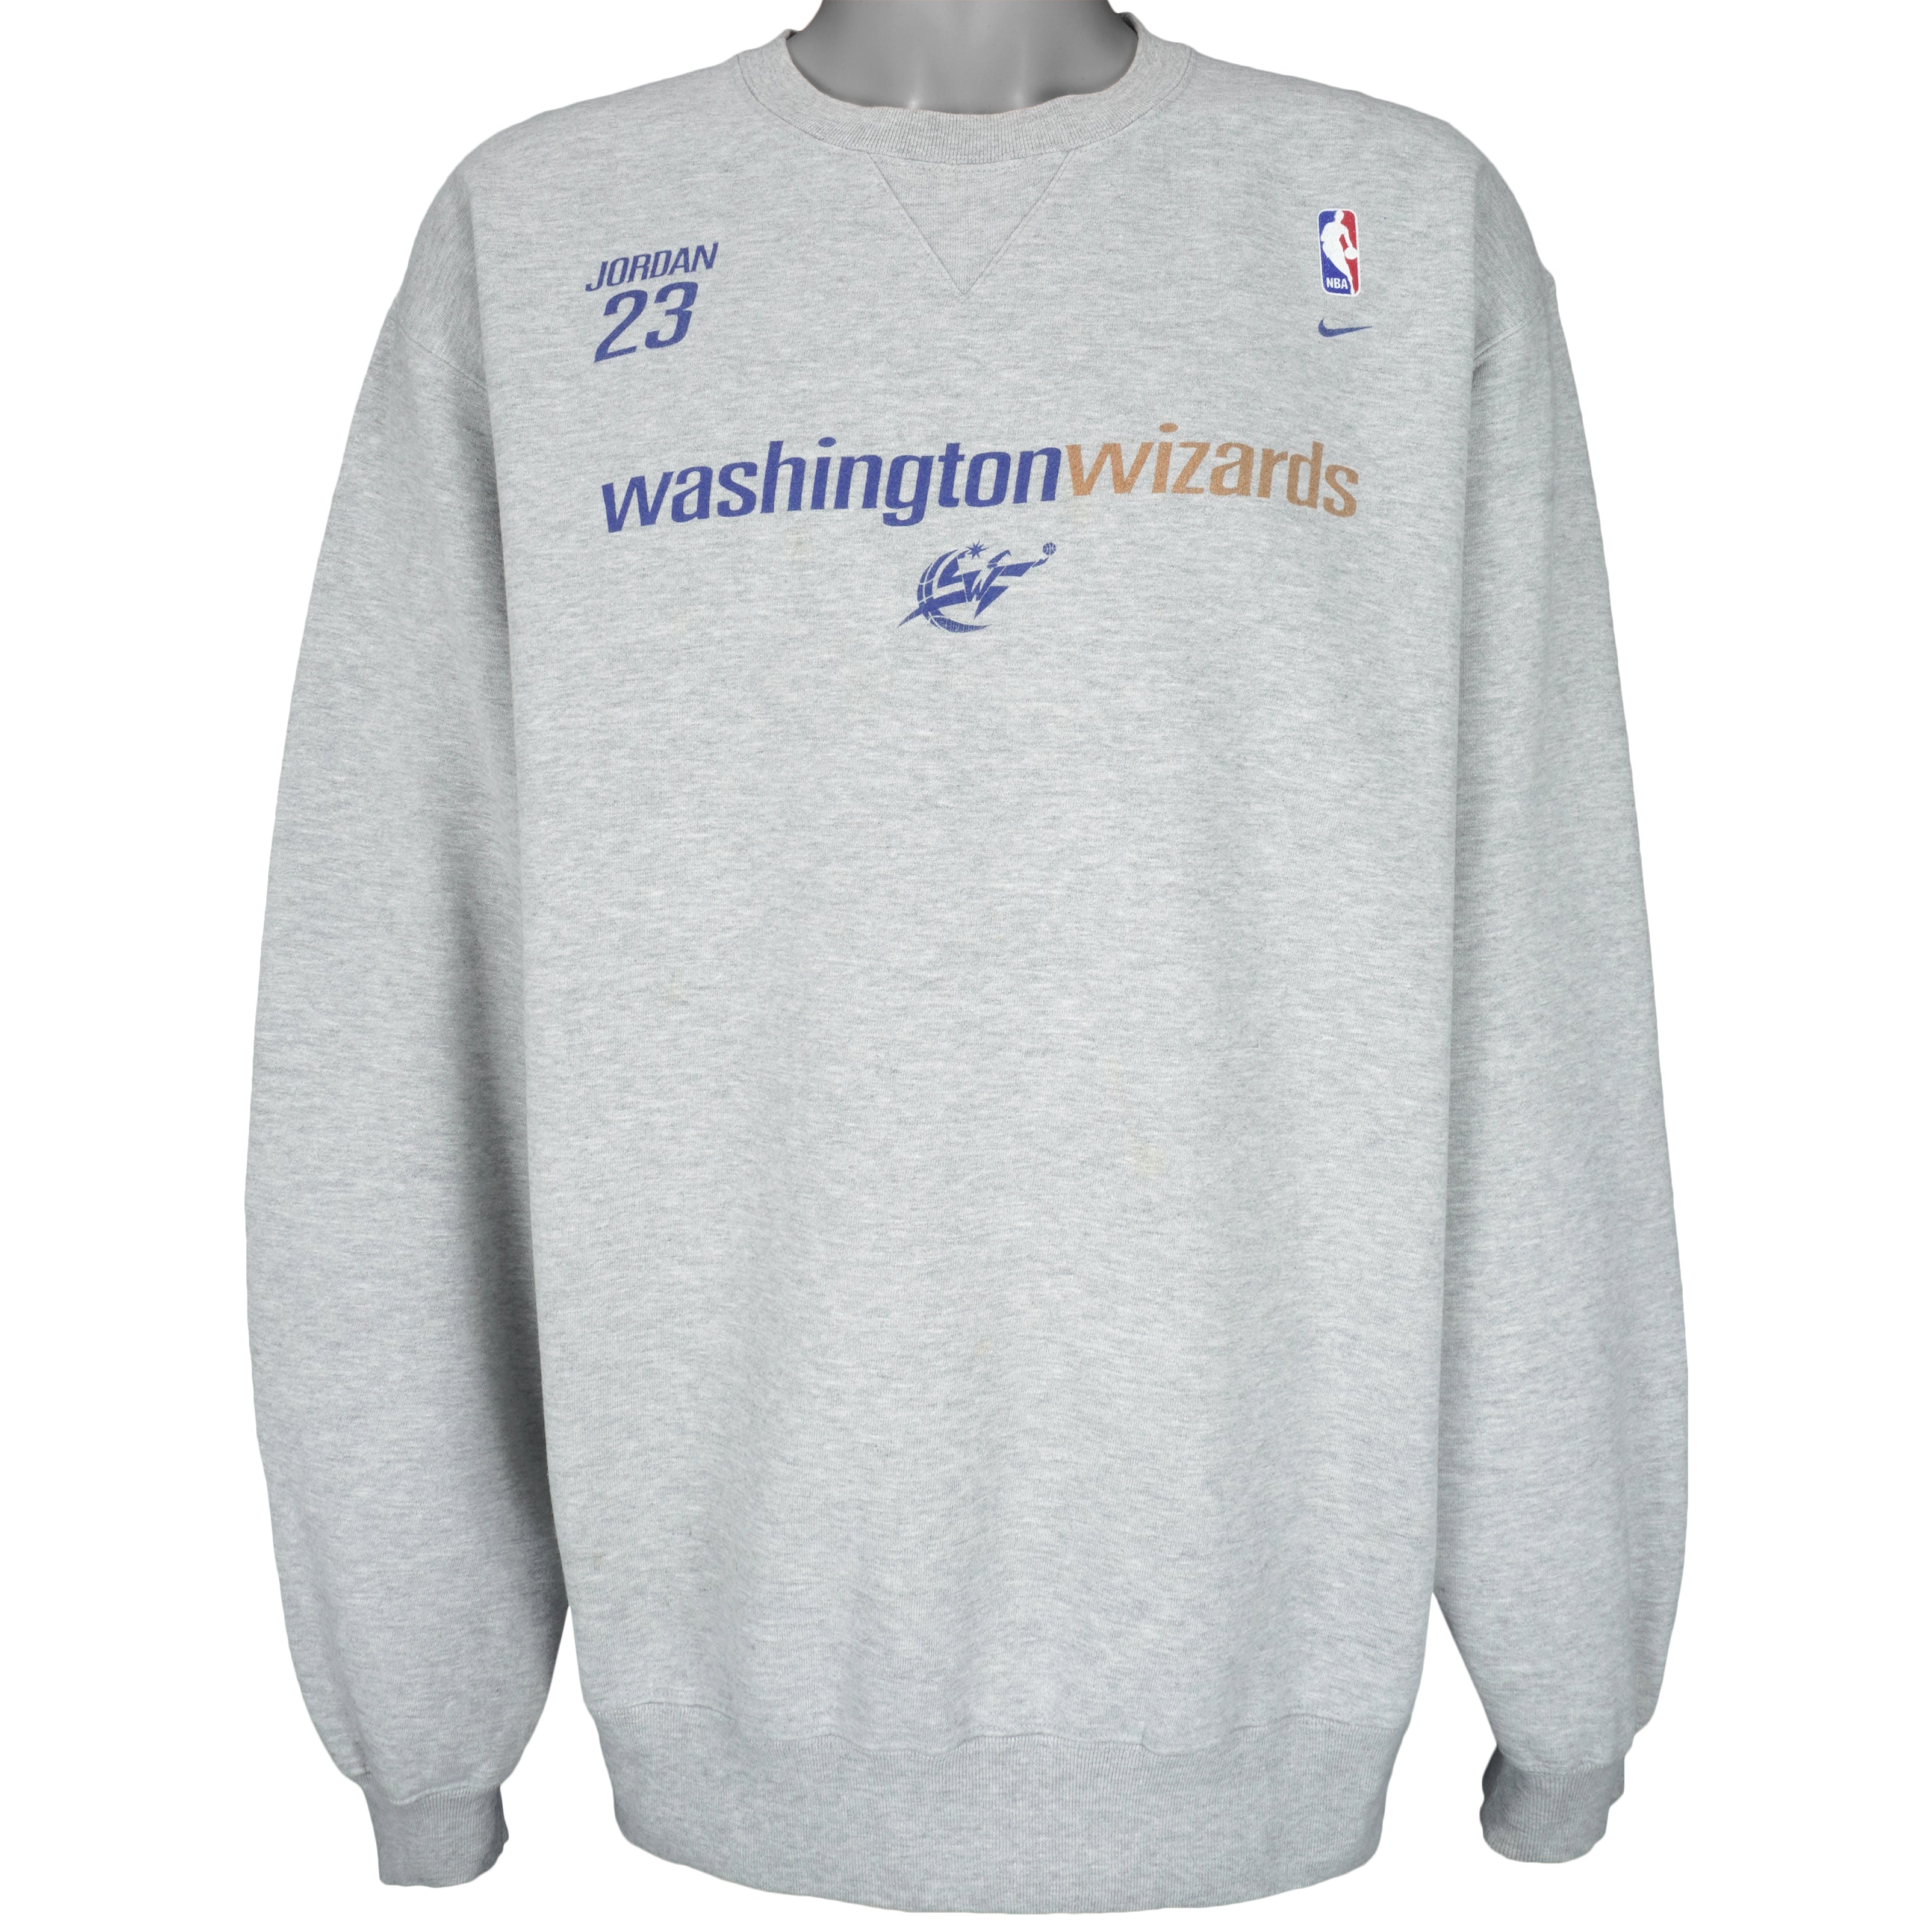 Washington Wizards - Pro Sweatshirts